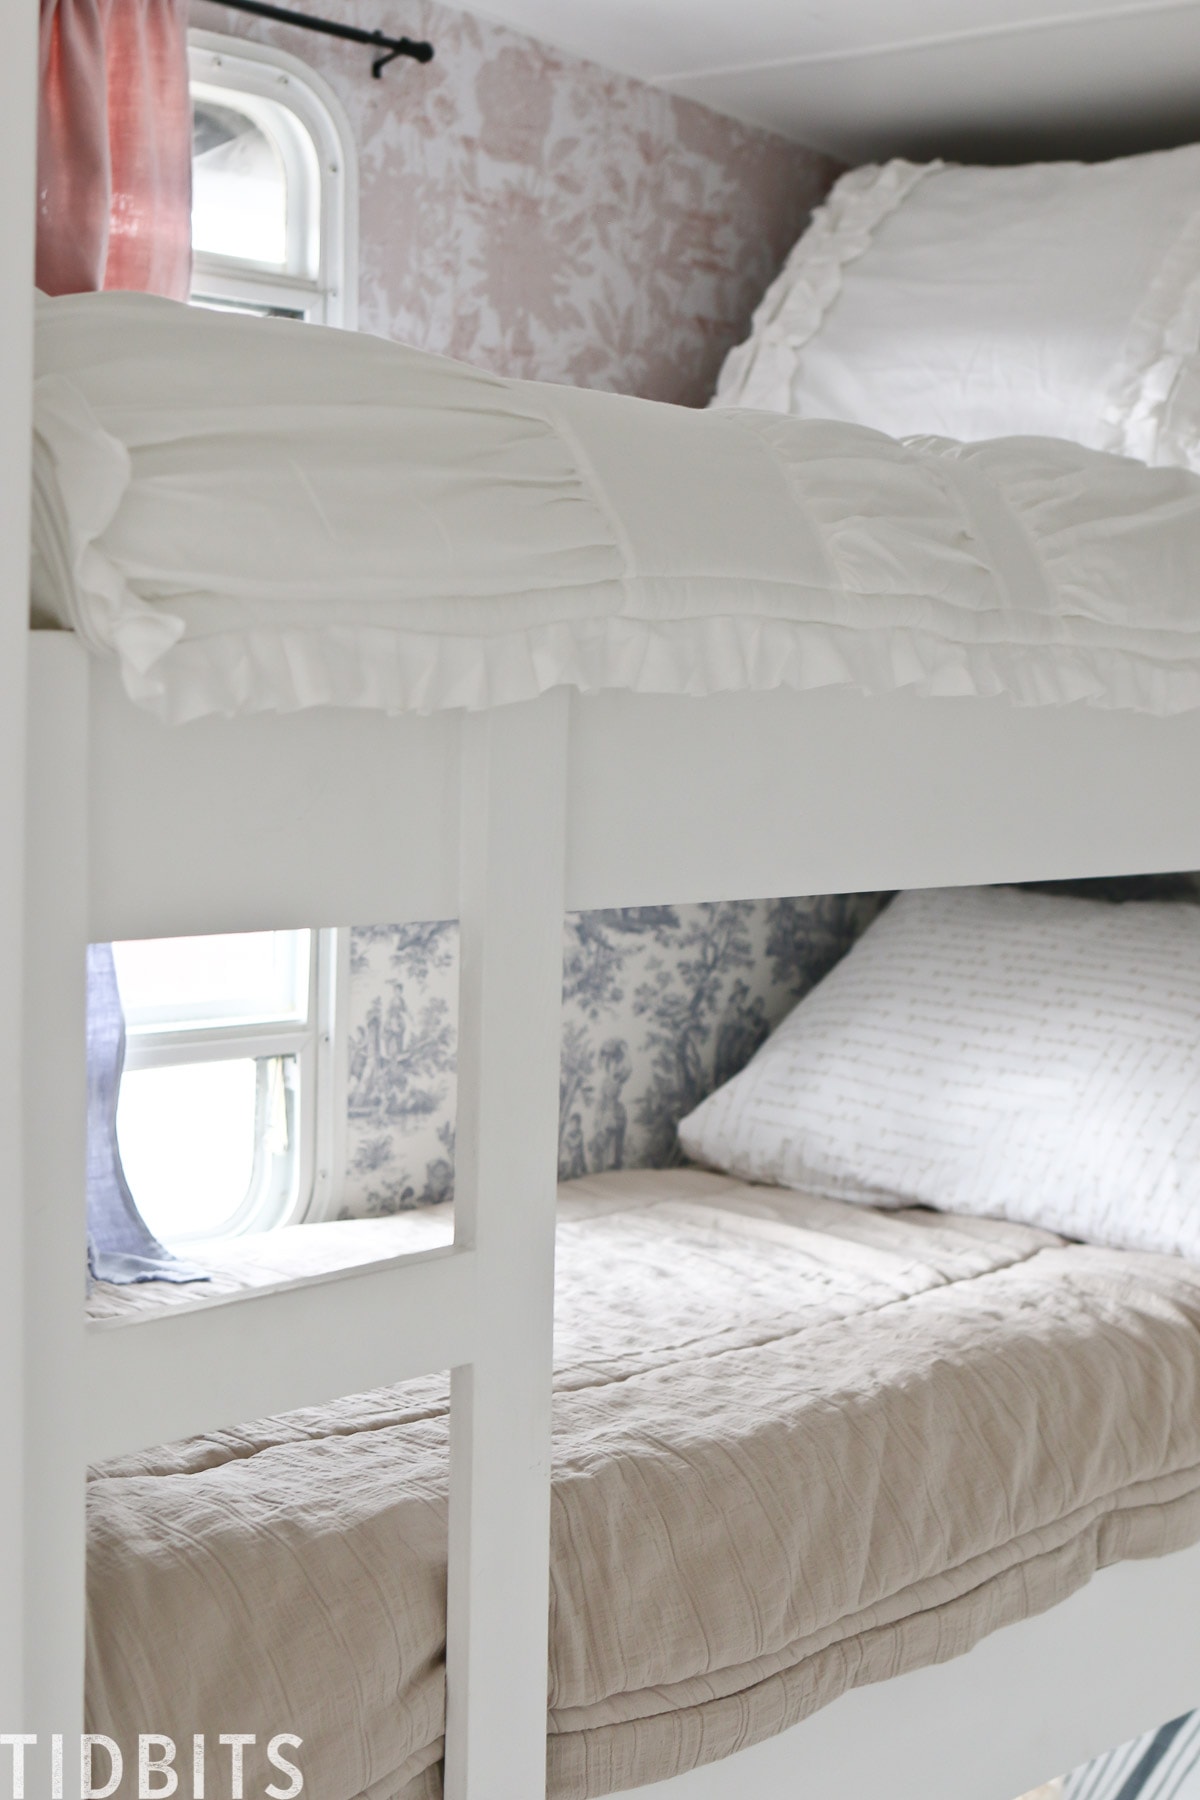 Rv Bunk Bed Sheets Carnawall Com, Rv Bunk Bed Comforter